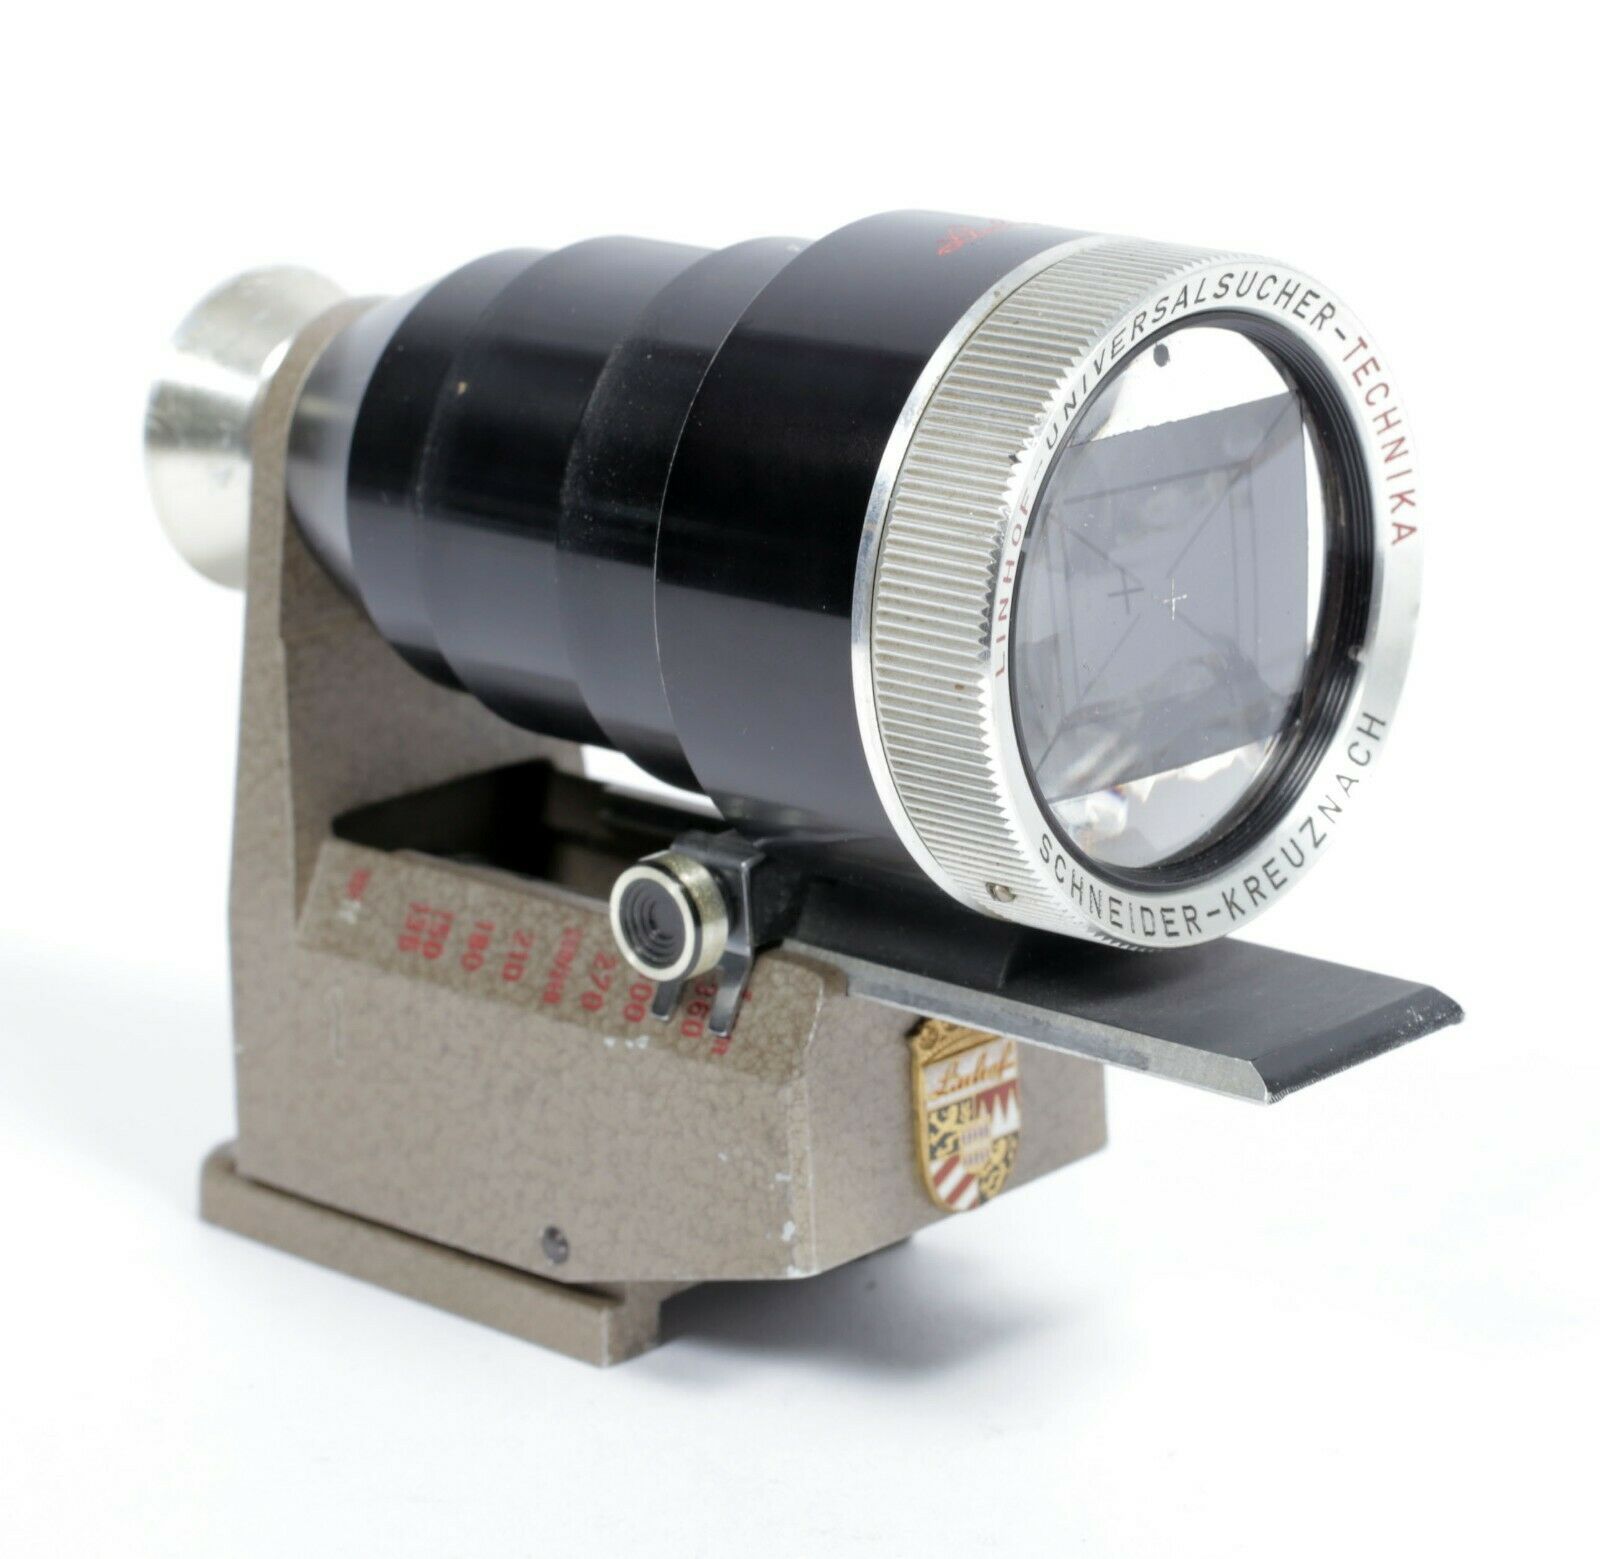 Universal Linhof Technika multi focal length frame finder 90-360mm 